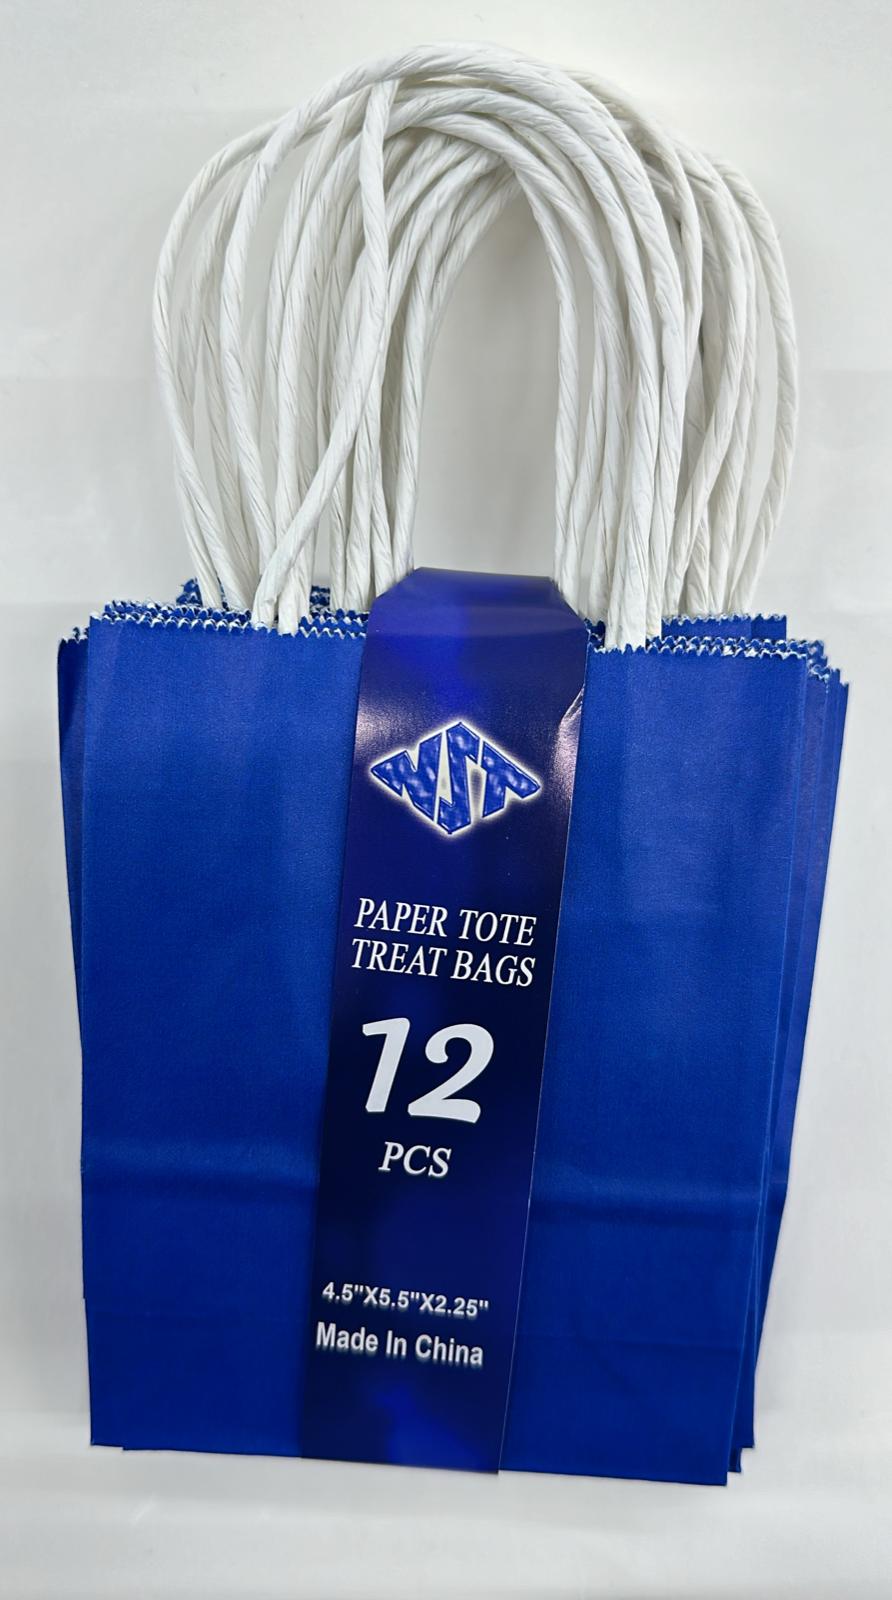 Paper Tote Treat Bags(4.5"x5.5"x2.25")(12pcs)